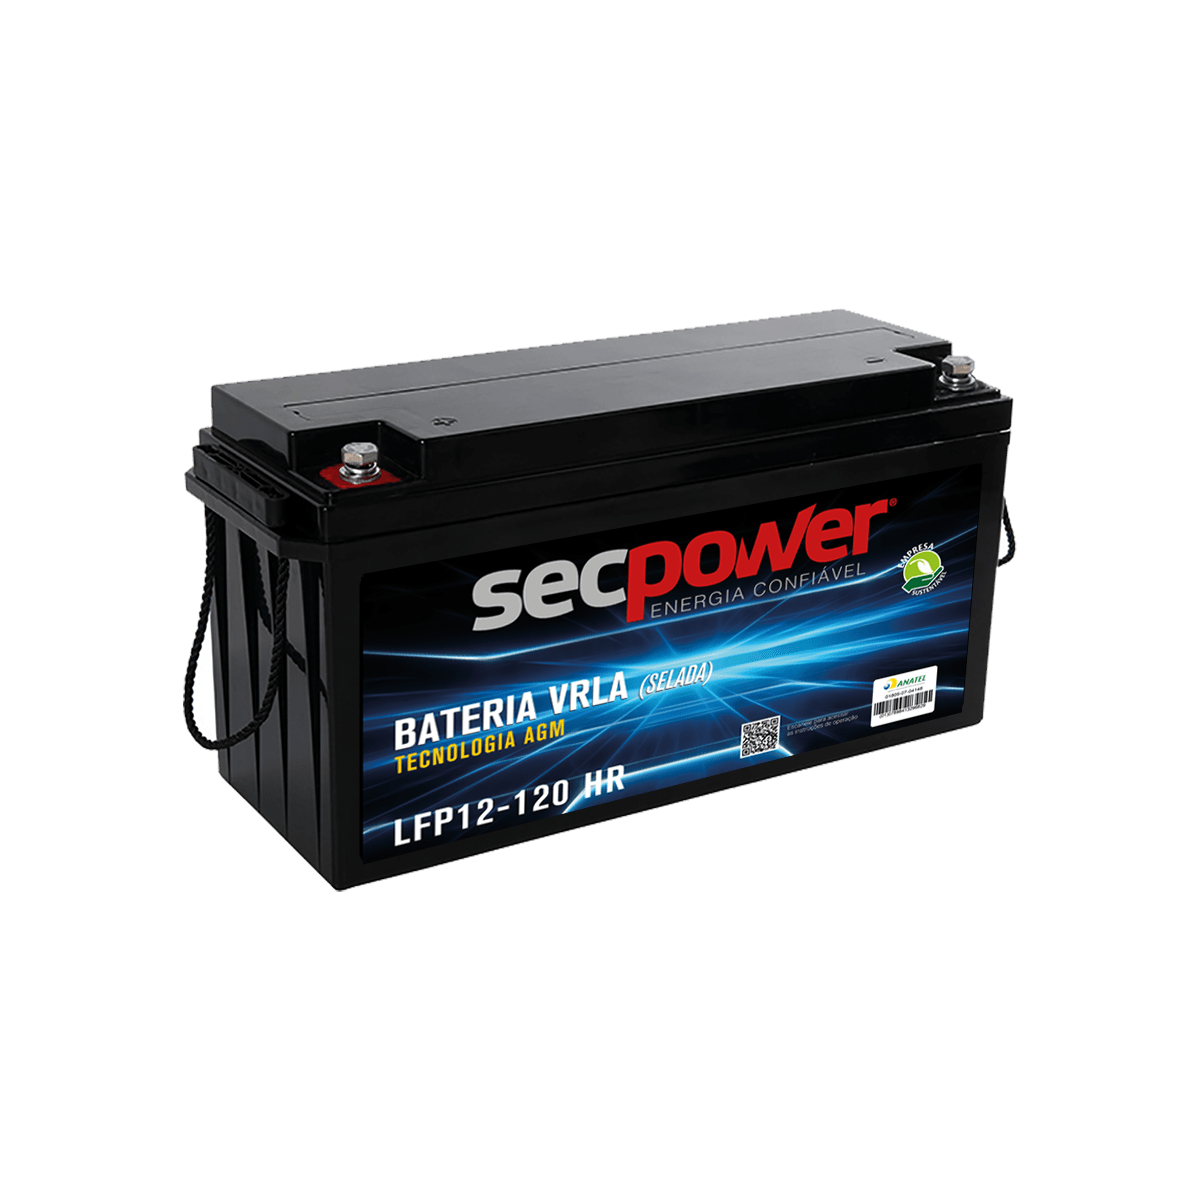 Bateria Chumbo Ácido VRLA AGM – Sec Power – LFP12-120 HR425W